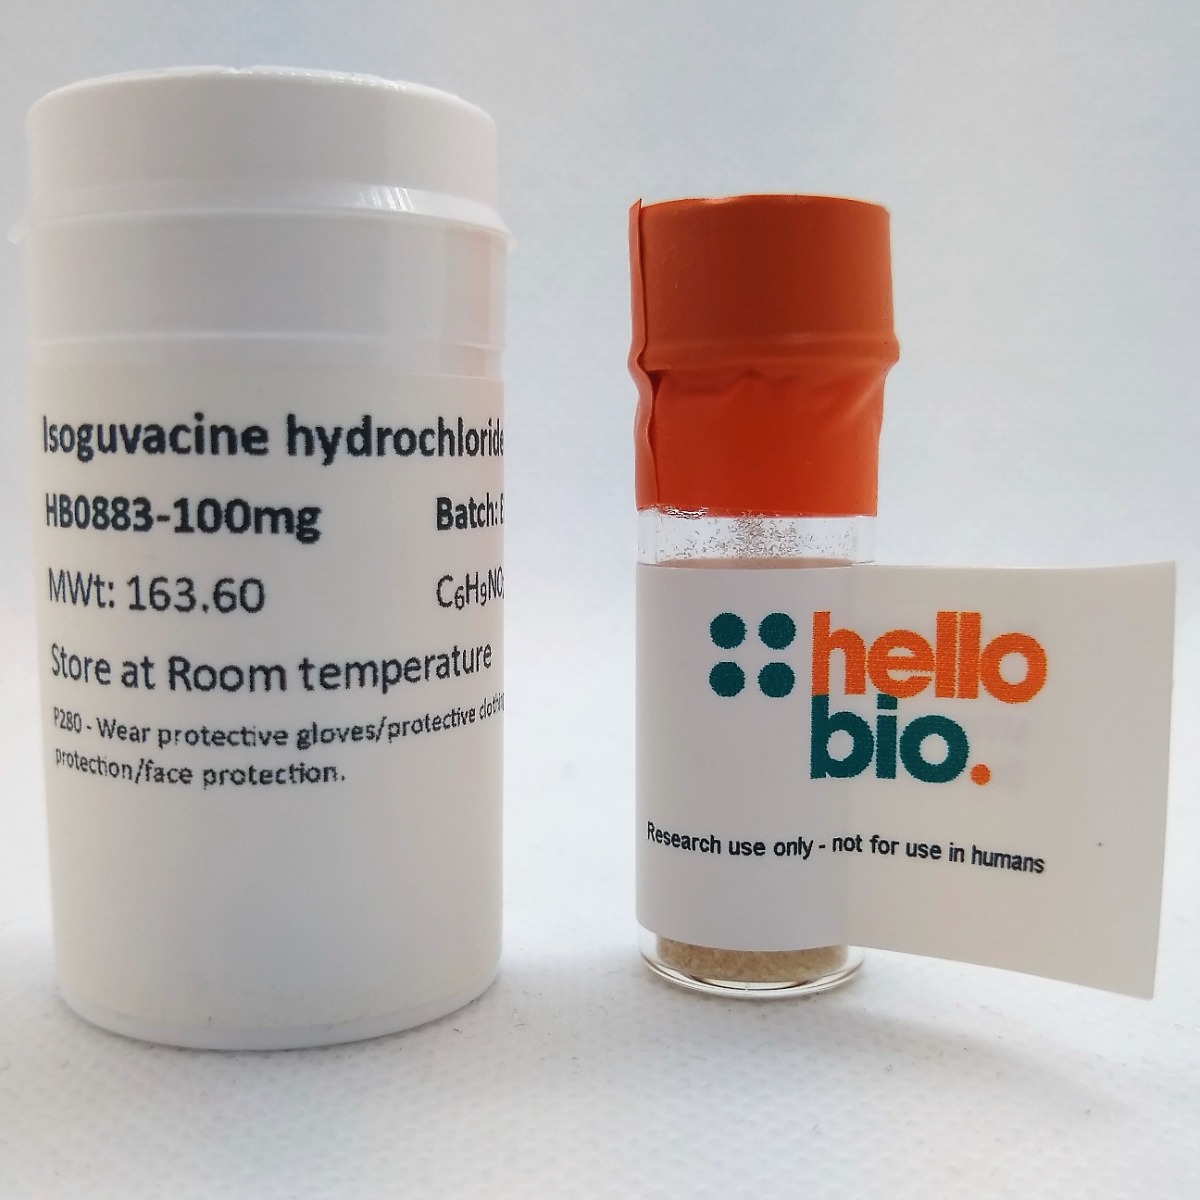 Isoguvacine hydrochloride product vial image | Hello Bio